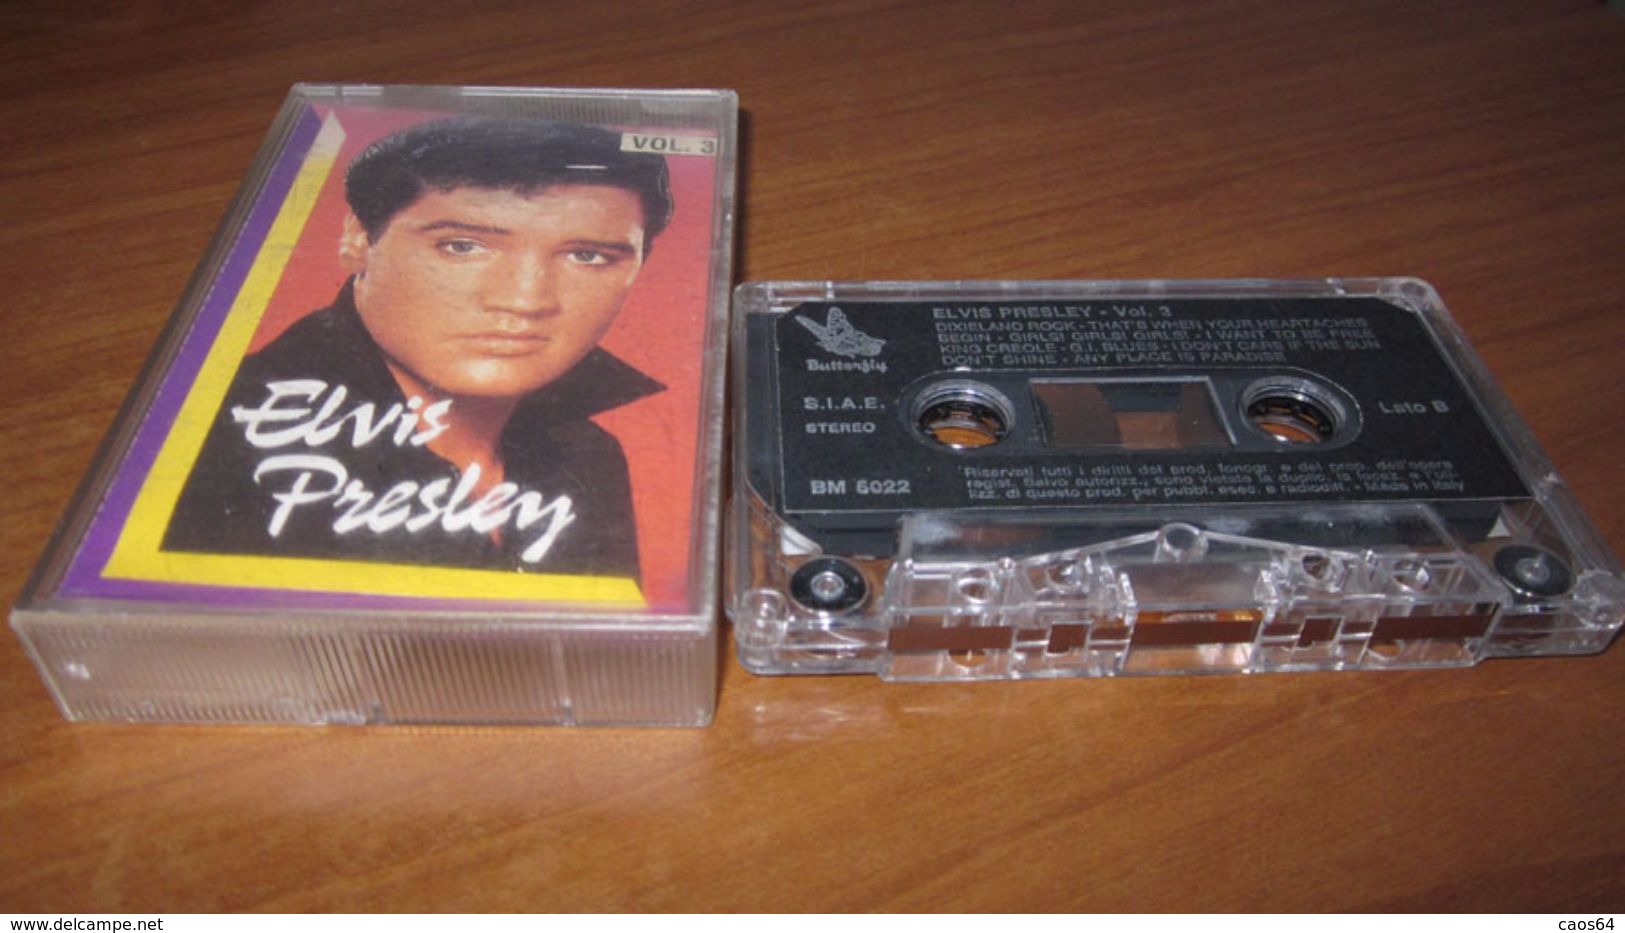 Elvis Presley ‎– Vol. 3  Butterfly ‎– BM 5022 - Cassette